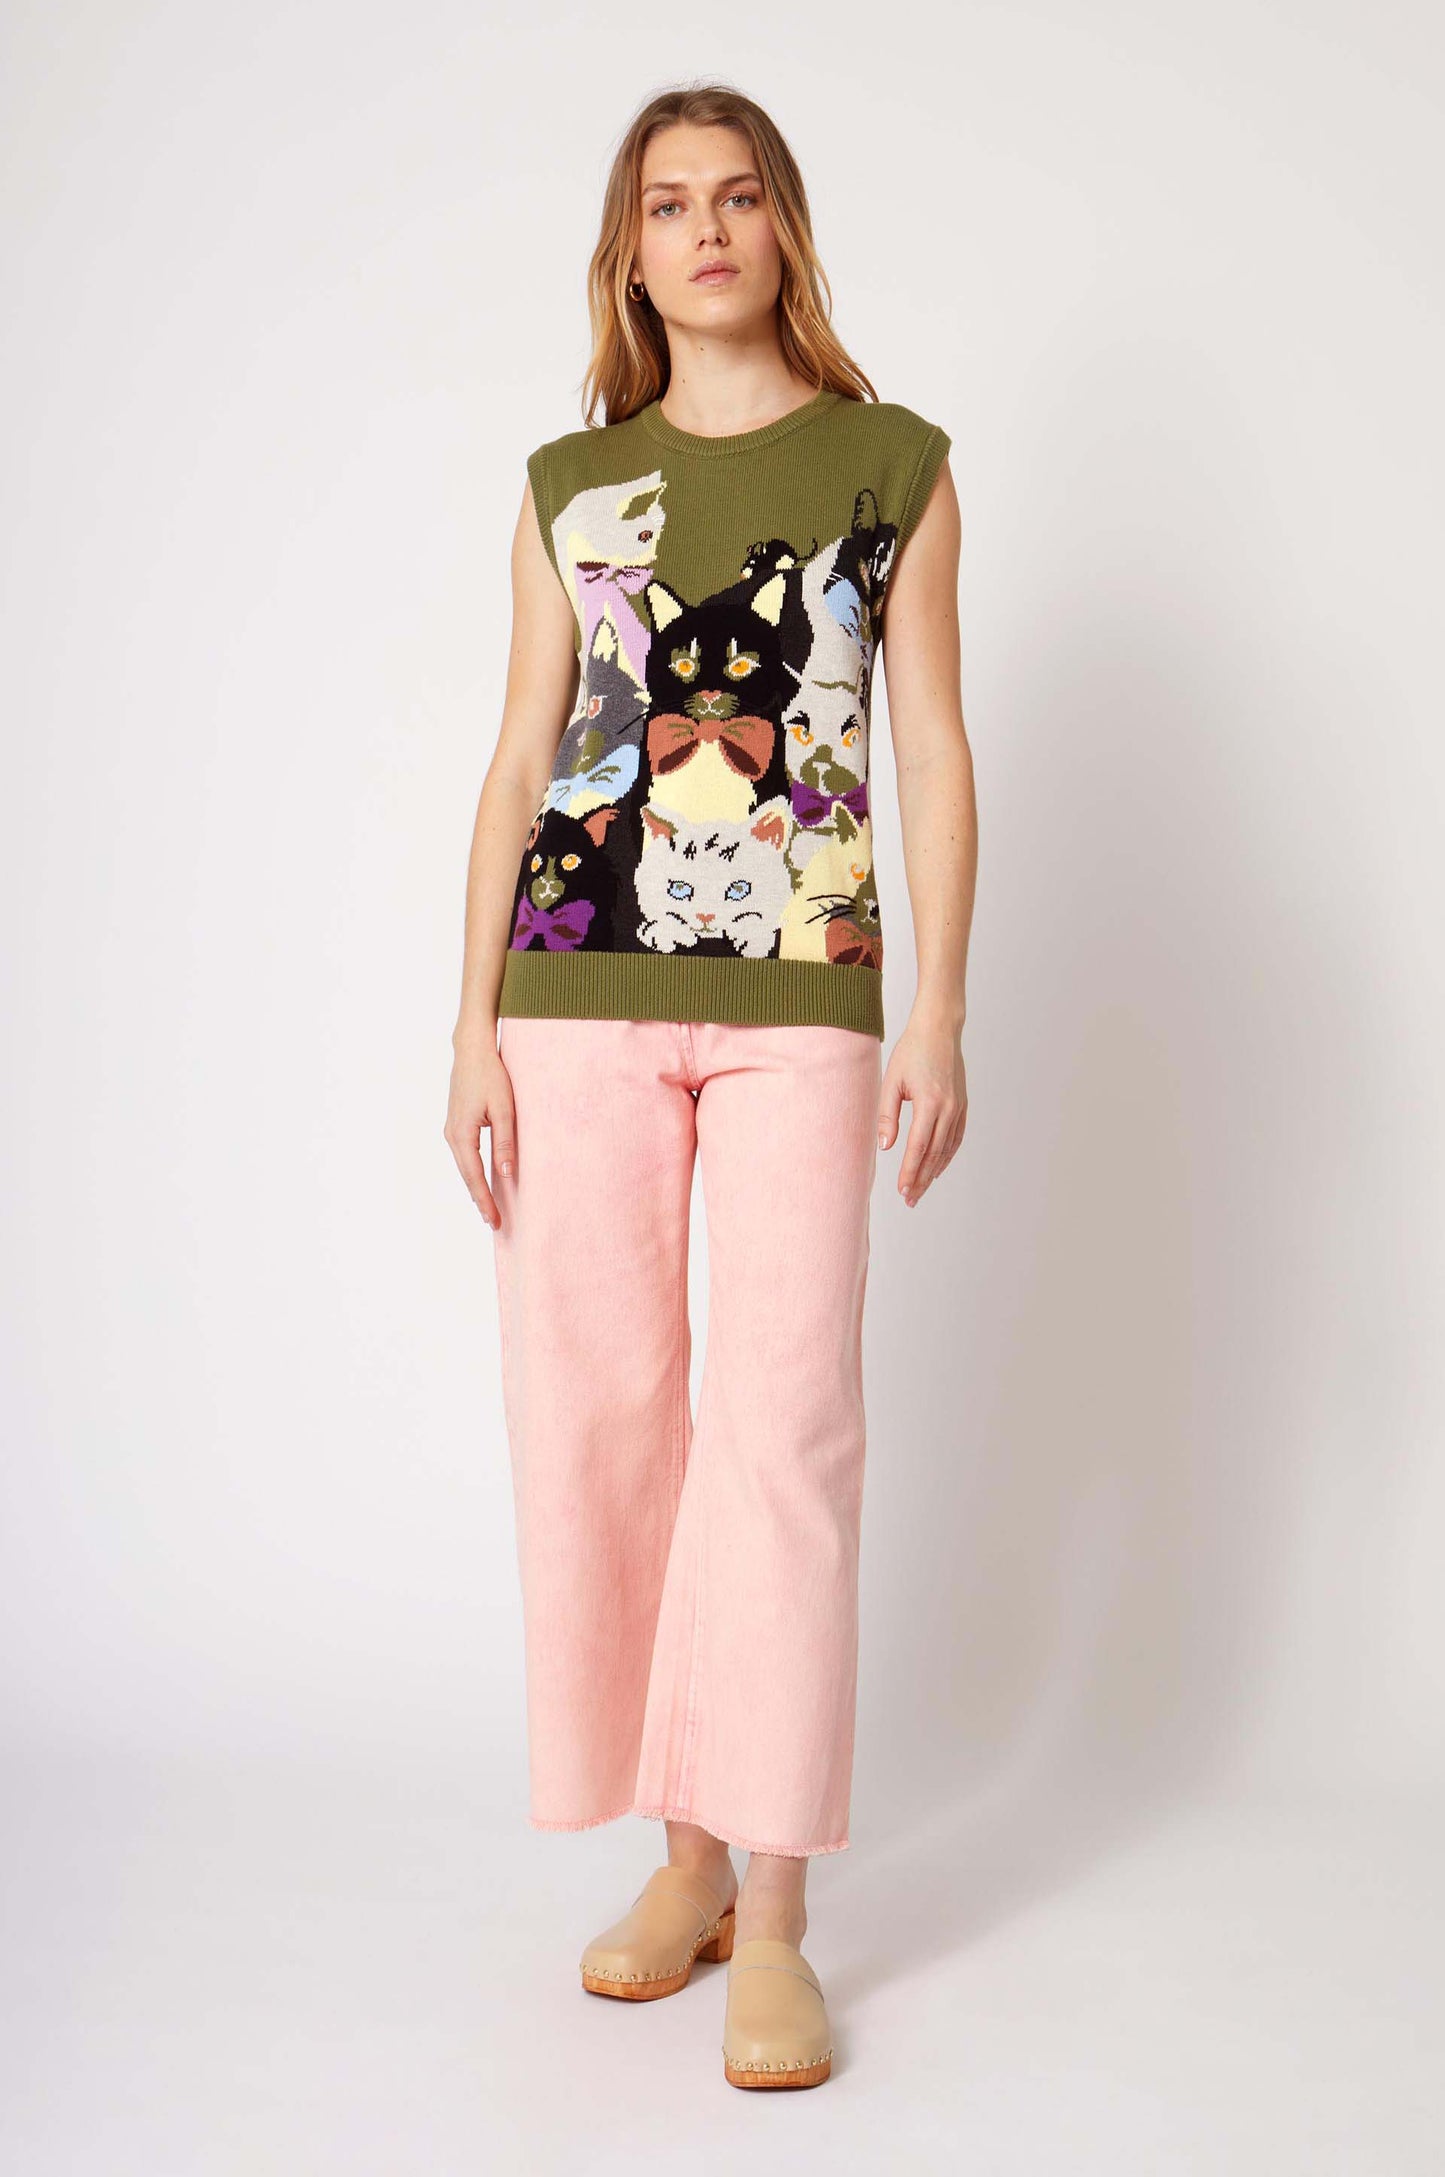 Manoush - Minette Vest: Kitten Collage